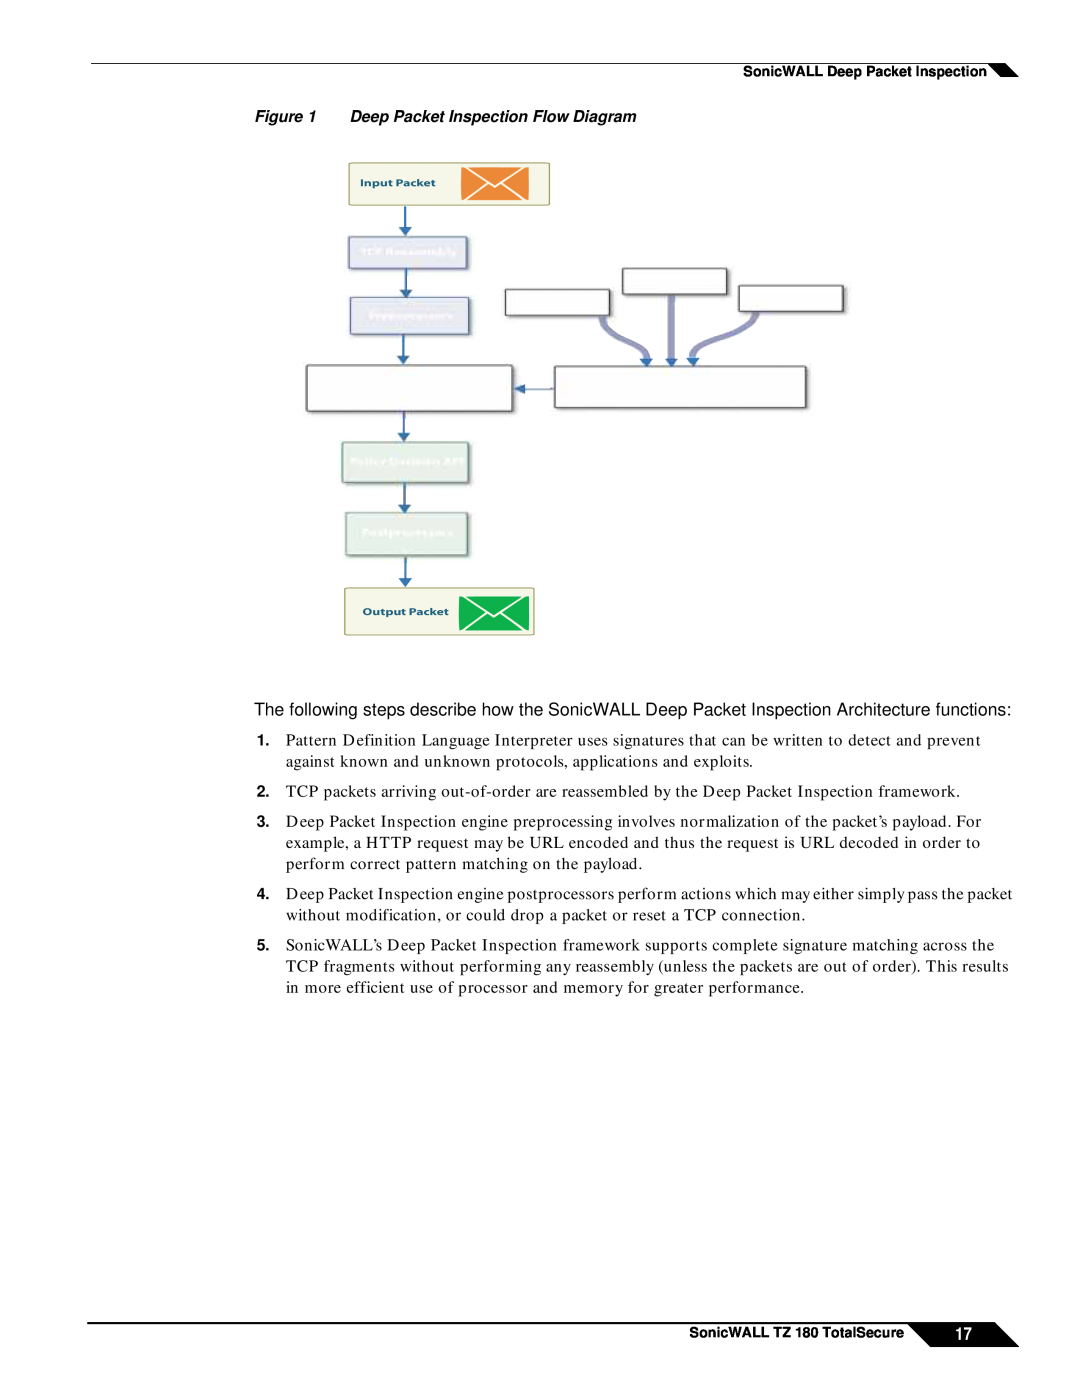 SonicWALL TZ 180 manual Deep Packet Inspection Flow Diagram, NPUTP0ACKET UTPUT 0ACKET 